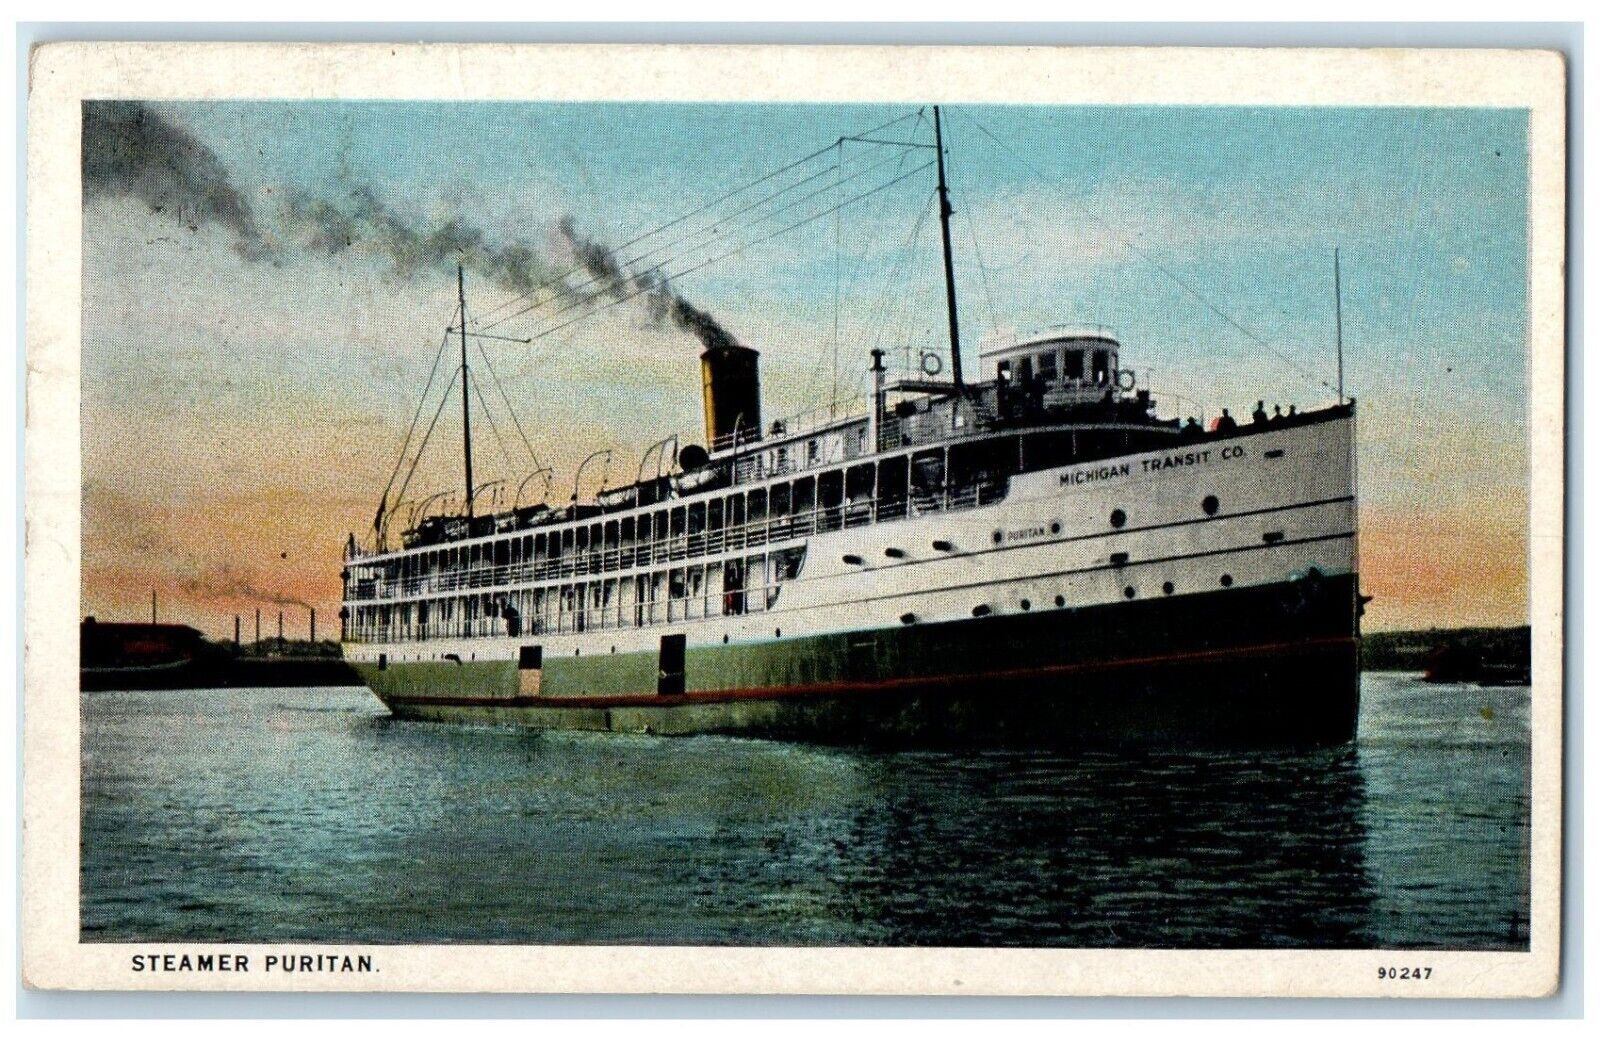 1930 Steamer Puritan Ferry Cruise Ship Michigan Transit Co. MI Vintage Postcard